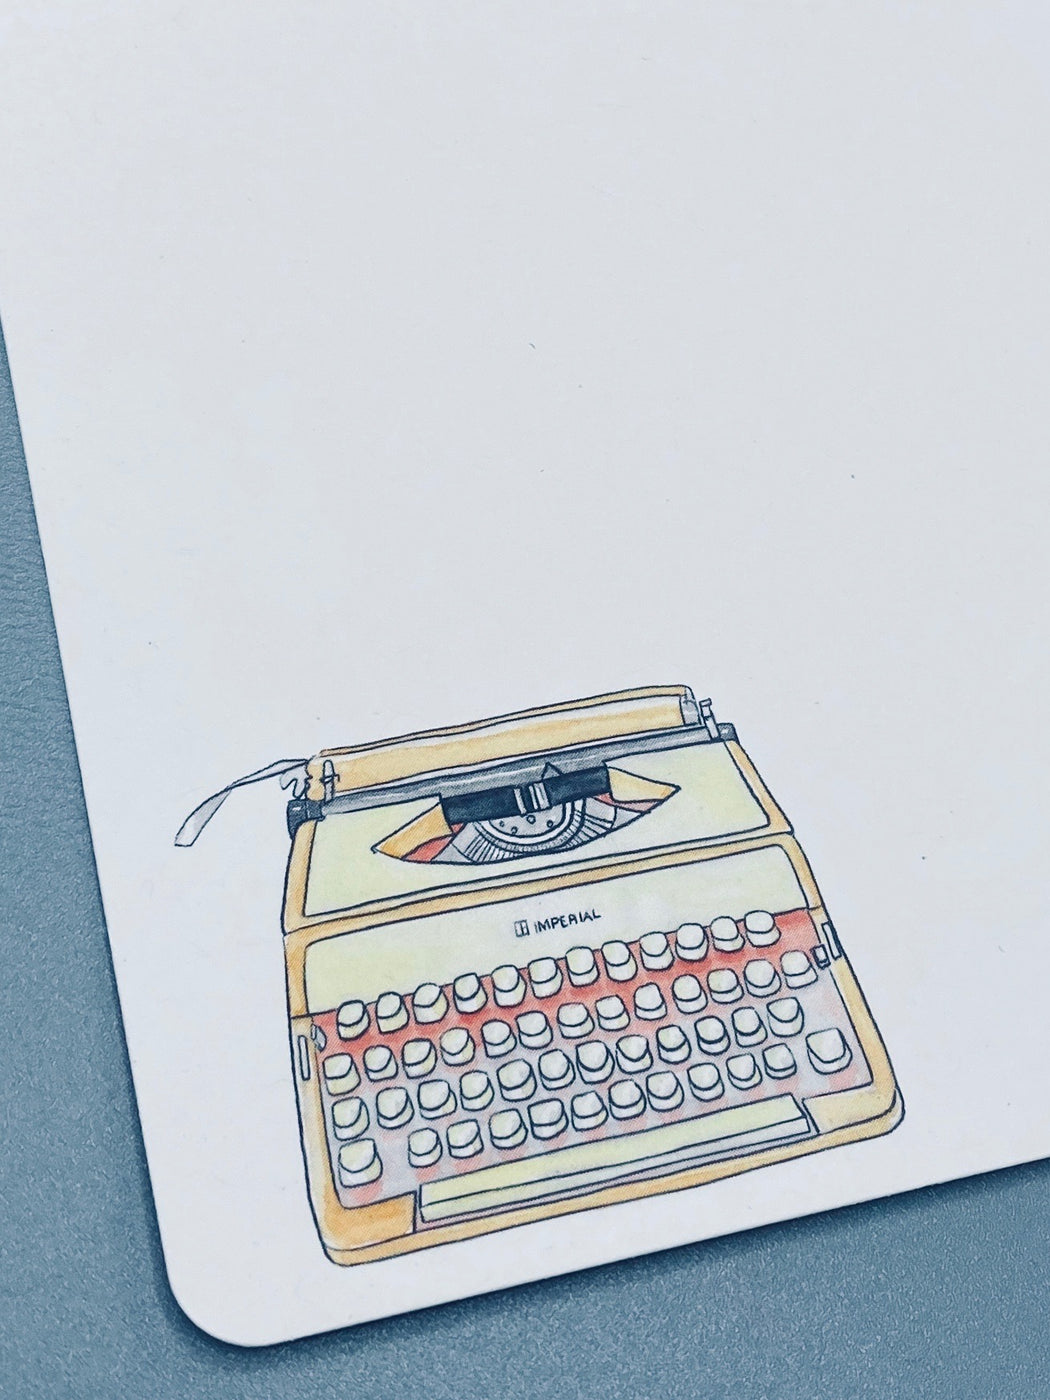 Notecard illustration of a yellow typewriter